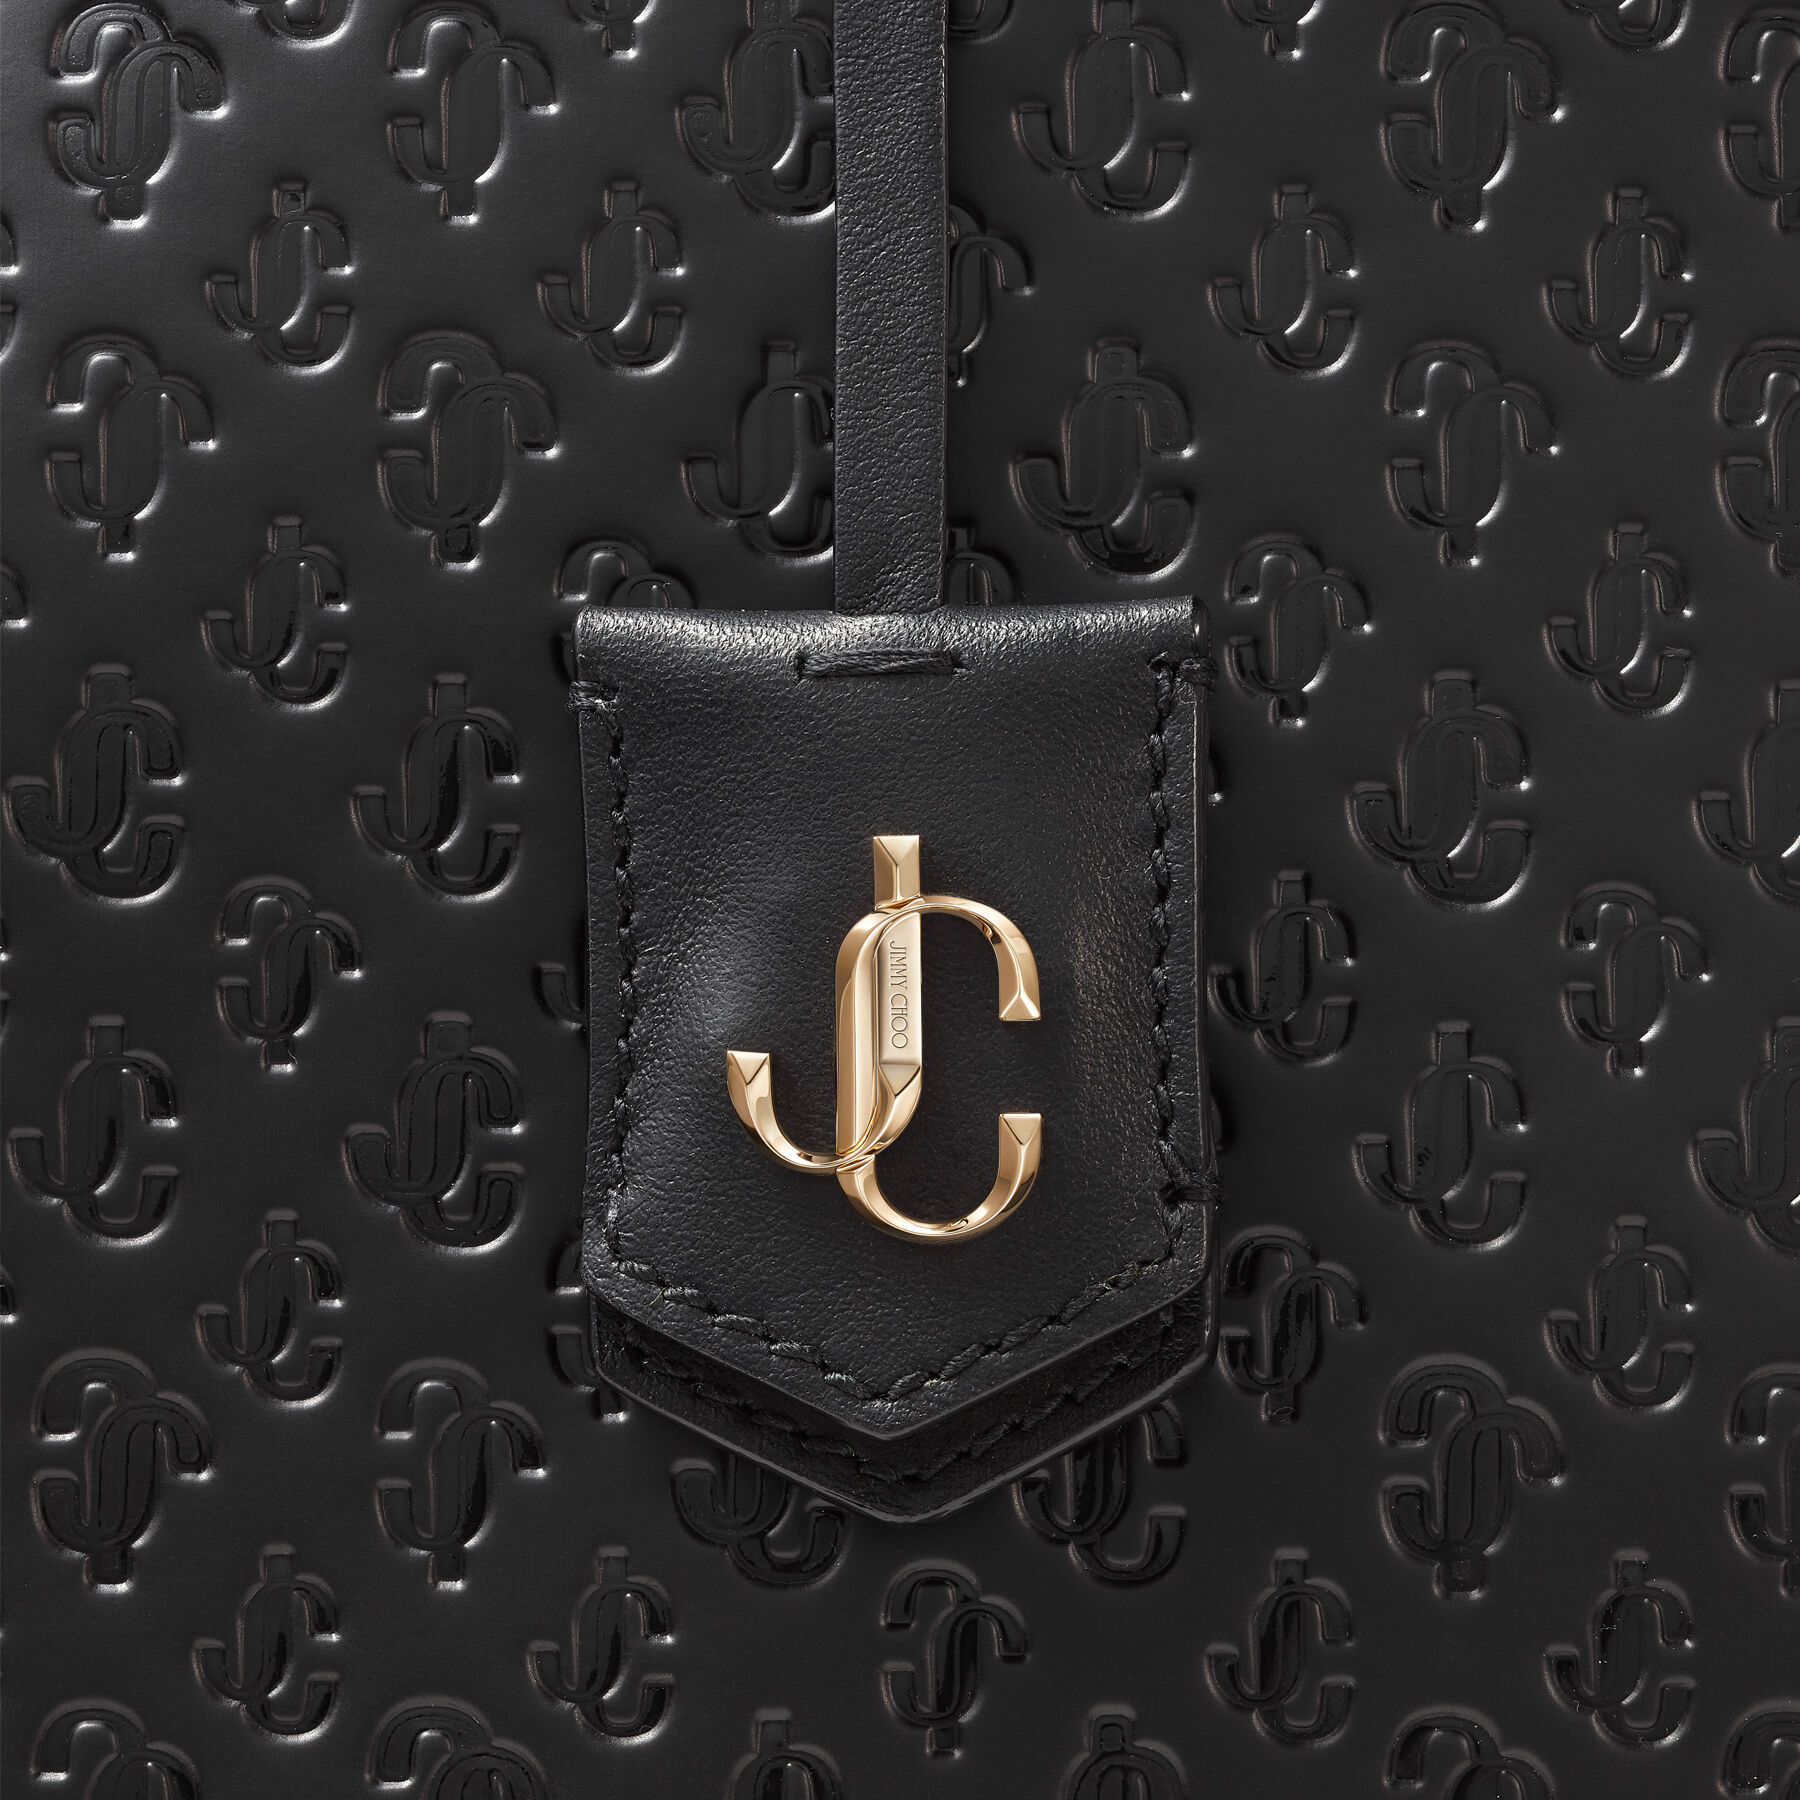 Black JC Monogram Pattern Tote Bag with Light Gold JC Emblem ...